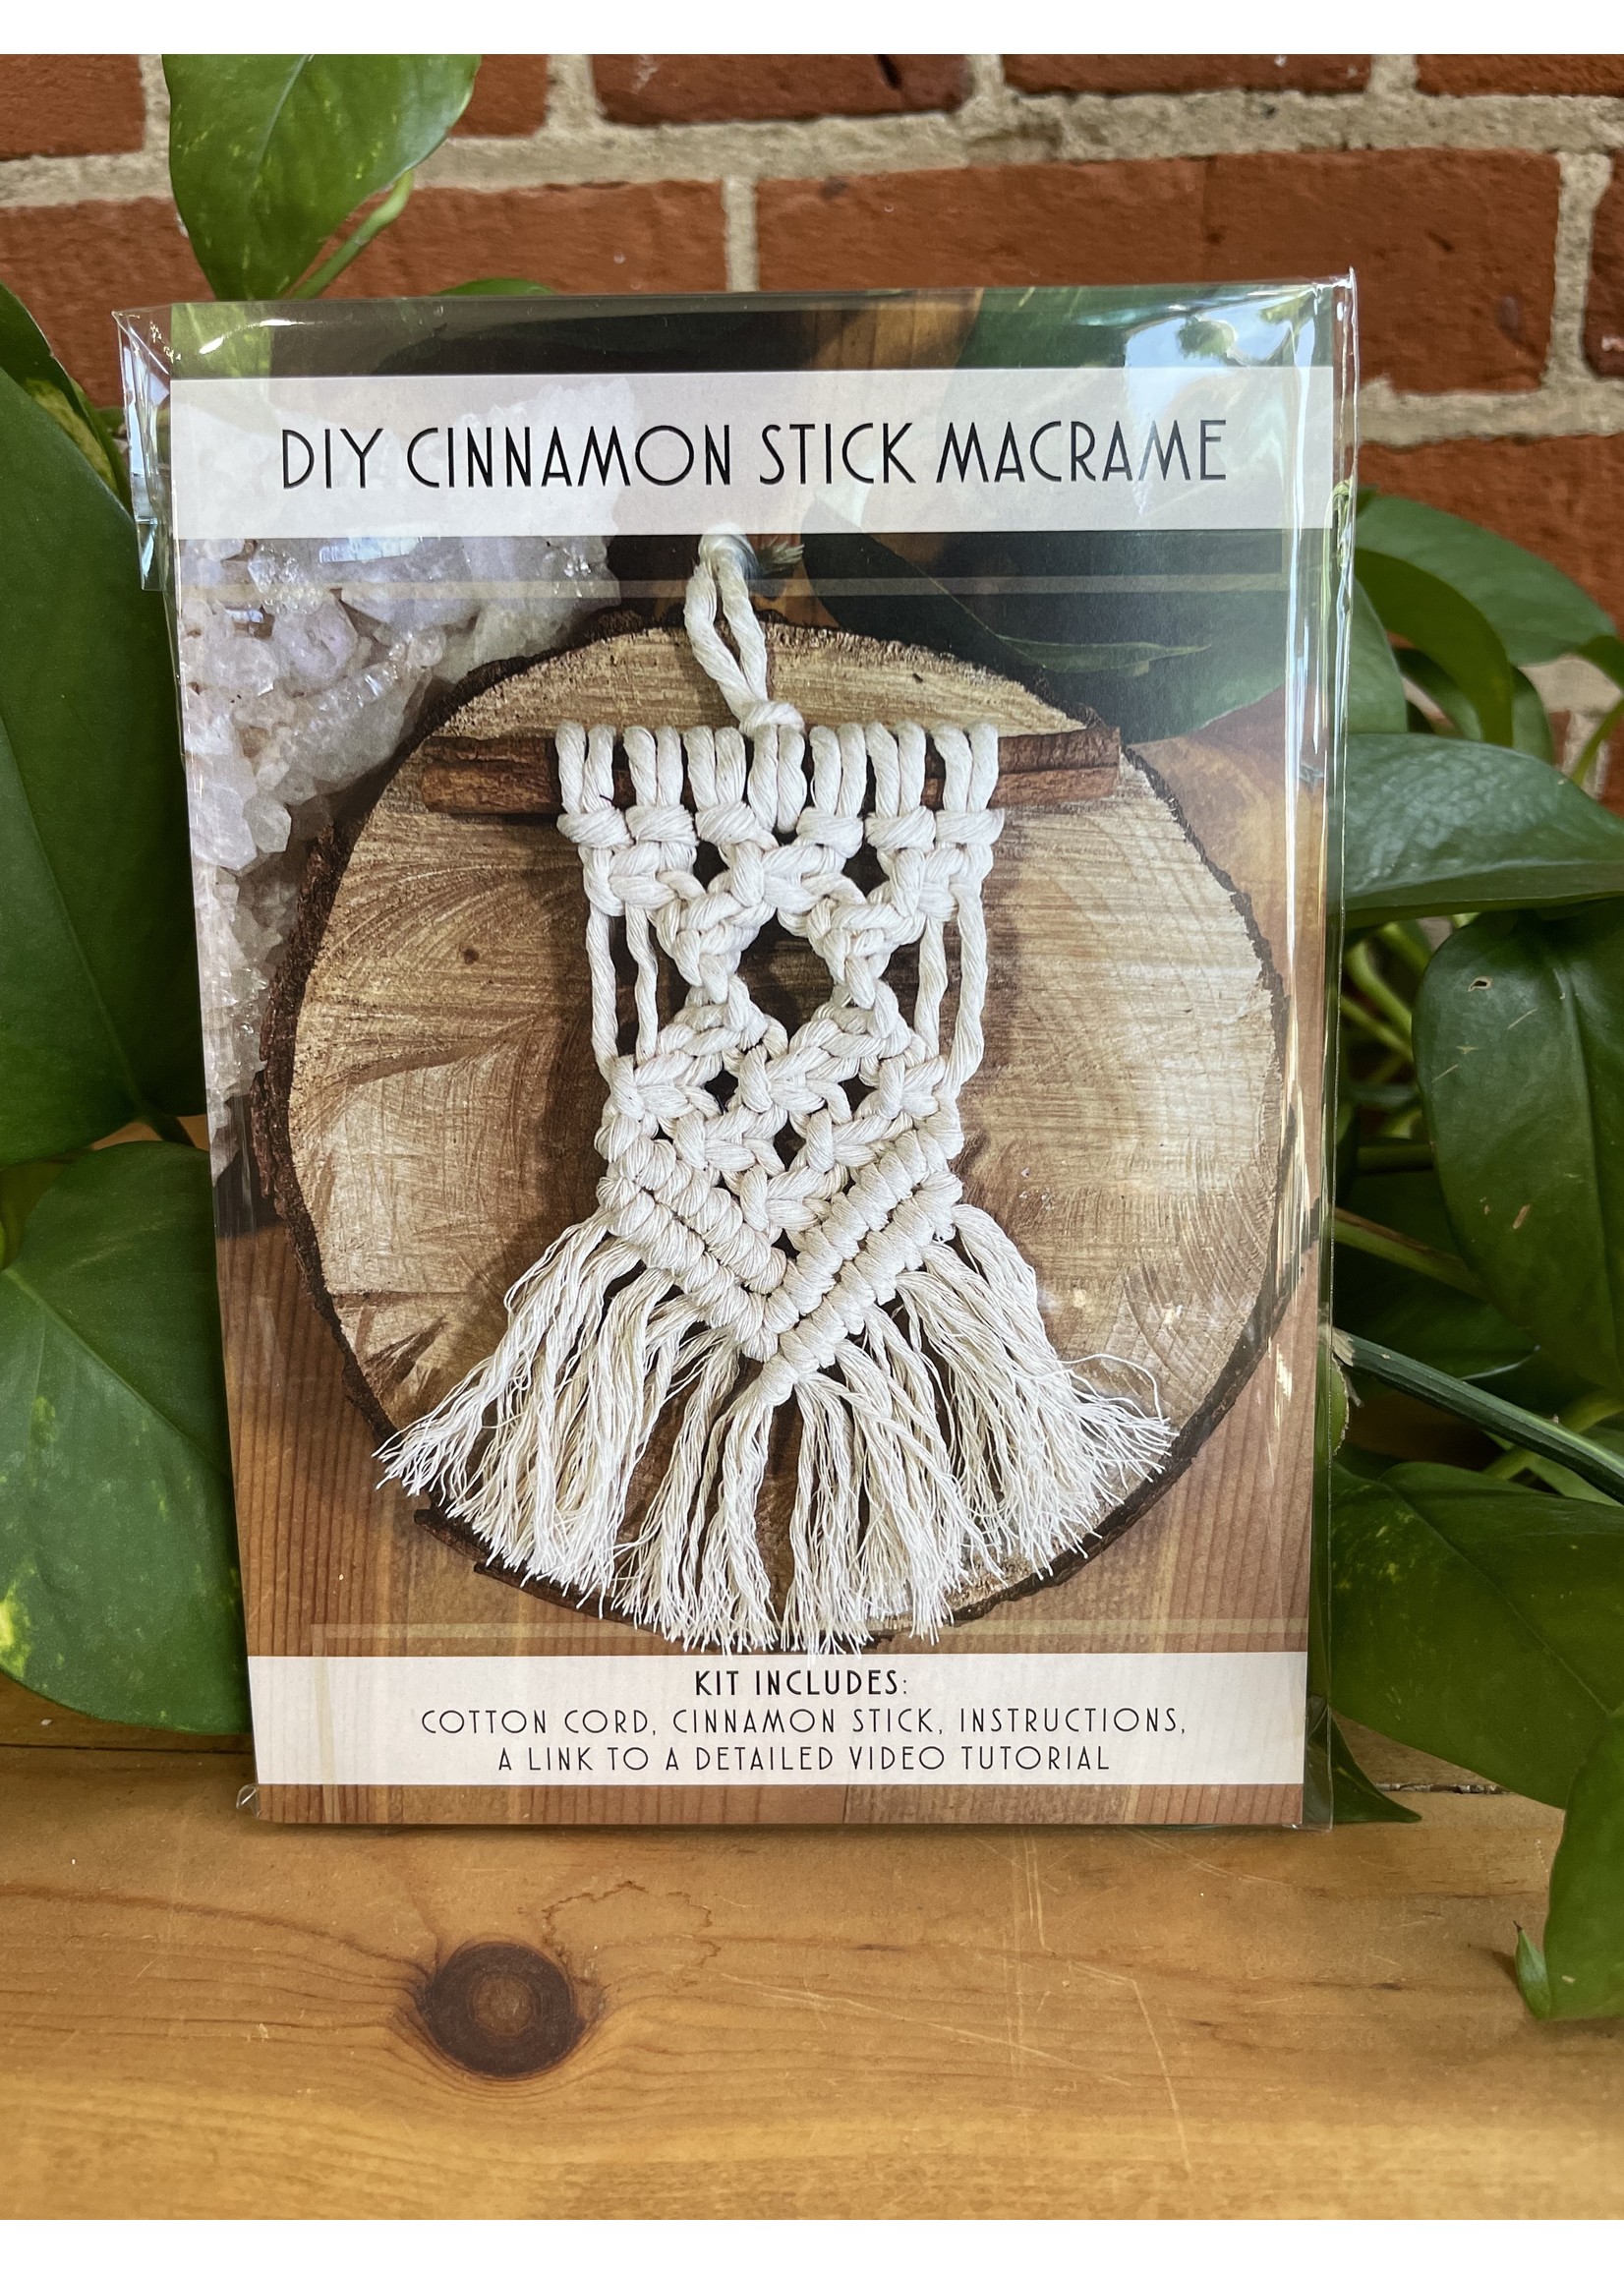 https://cdn.shoplightspeed.com/shops/643147/files/53534015/1652x2313x2/wholesale-diy-macrame-cinnamon-stick-kit.jpg